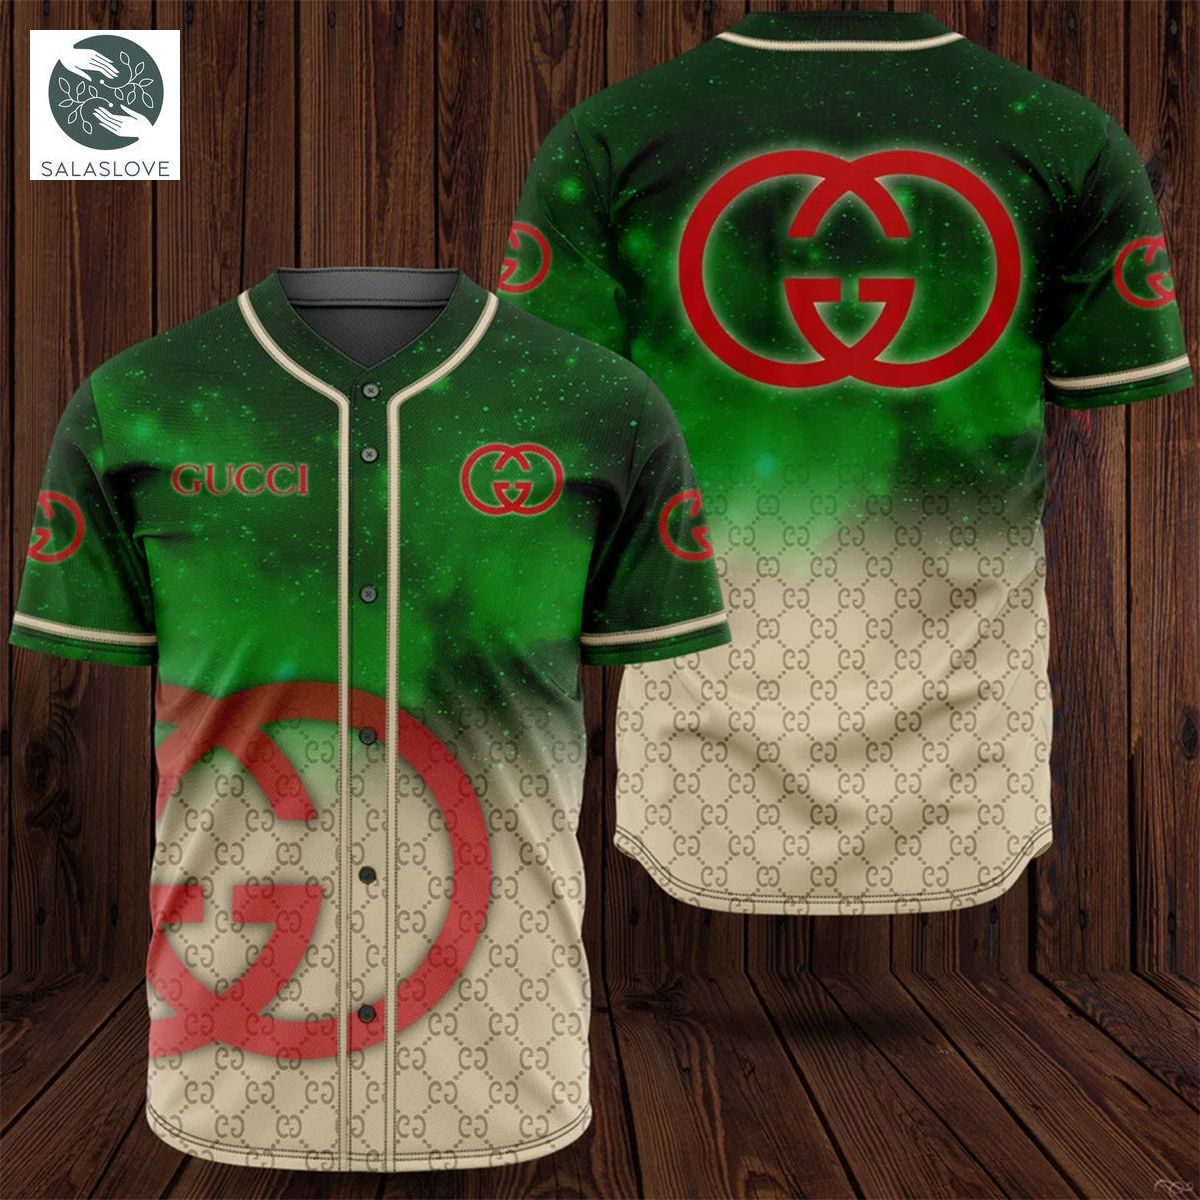 Gucci green baseball jersey shirt luxury clothing